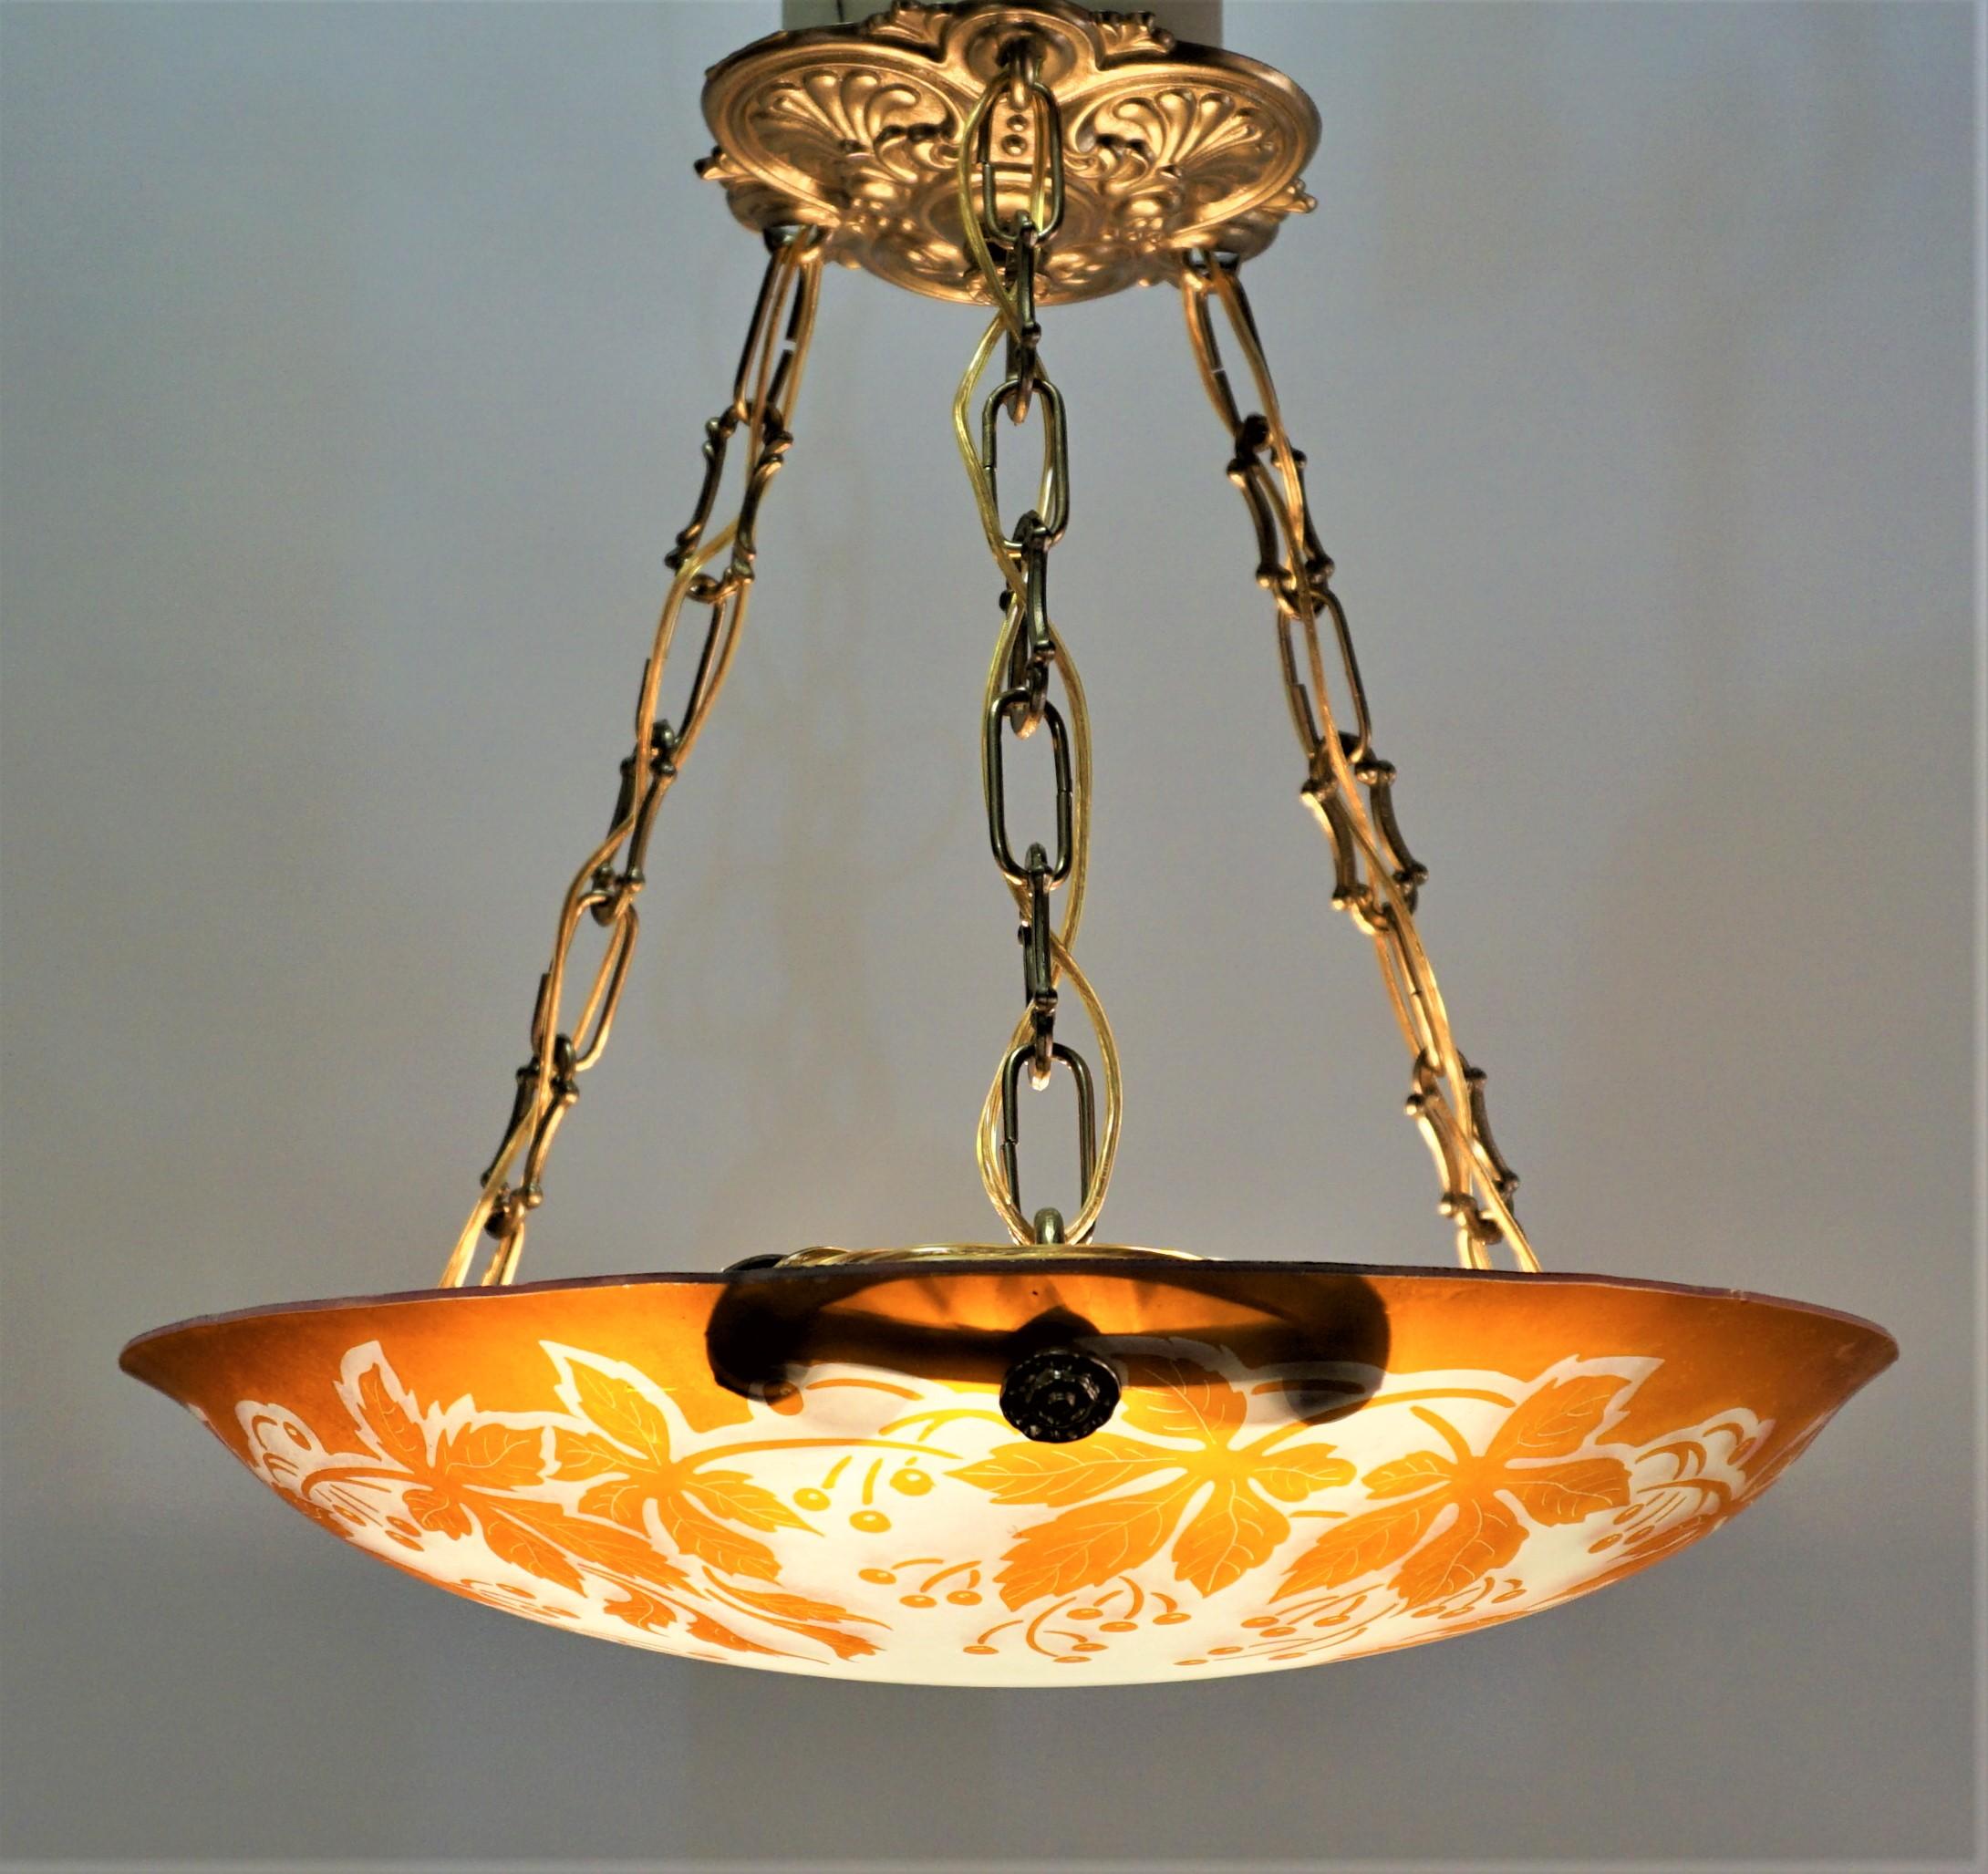 Beautiful acid cut cameo glass six light chandelier with bronze hardware.